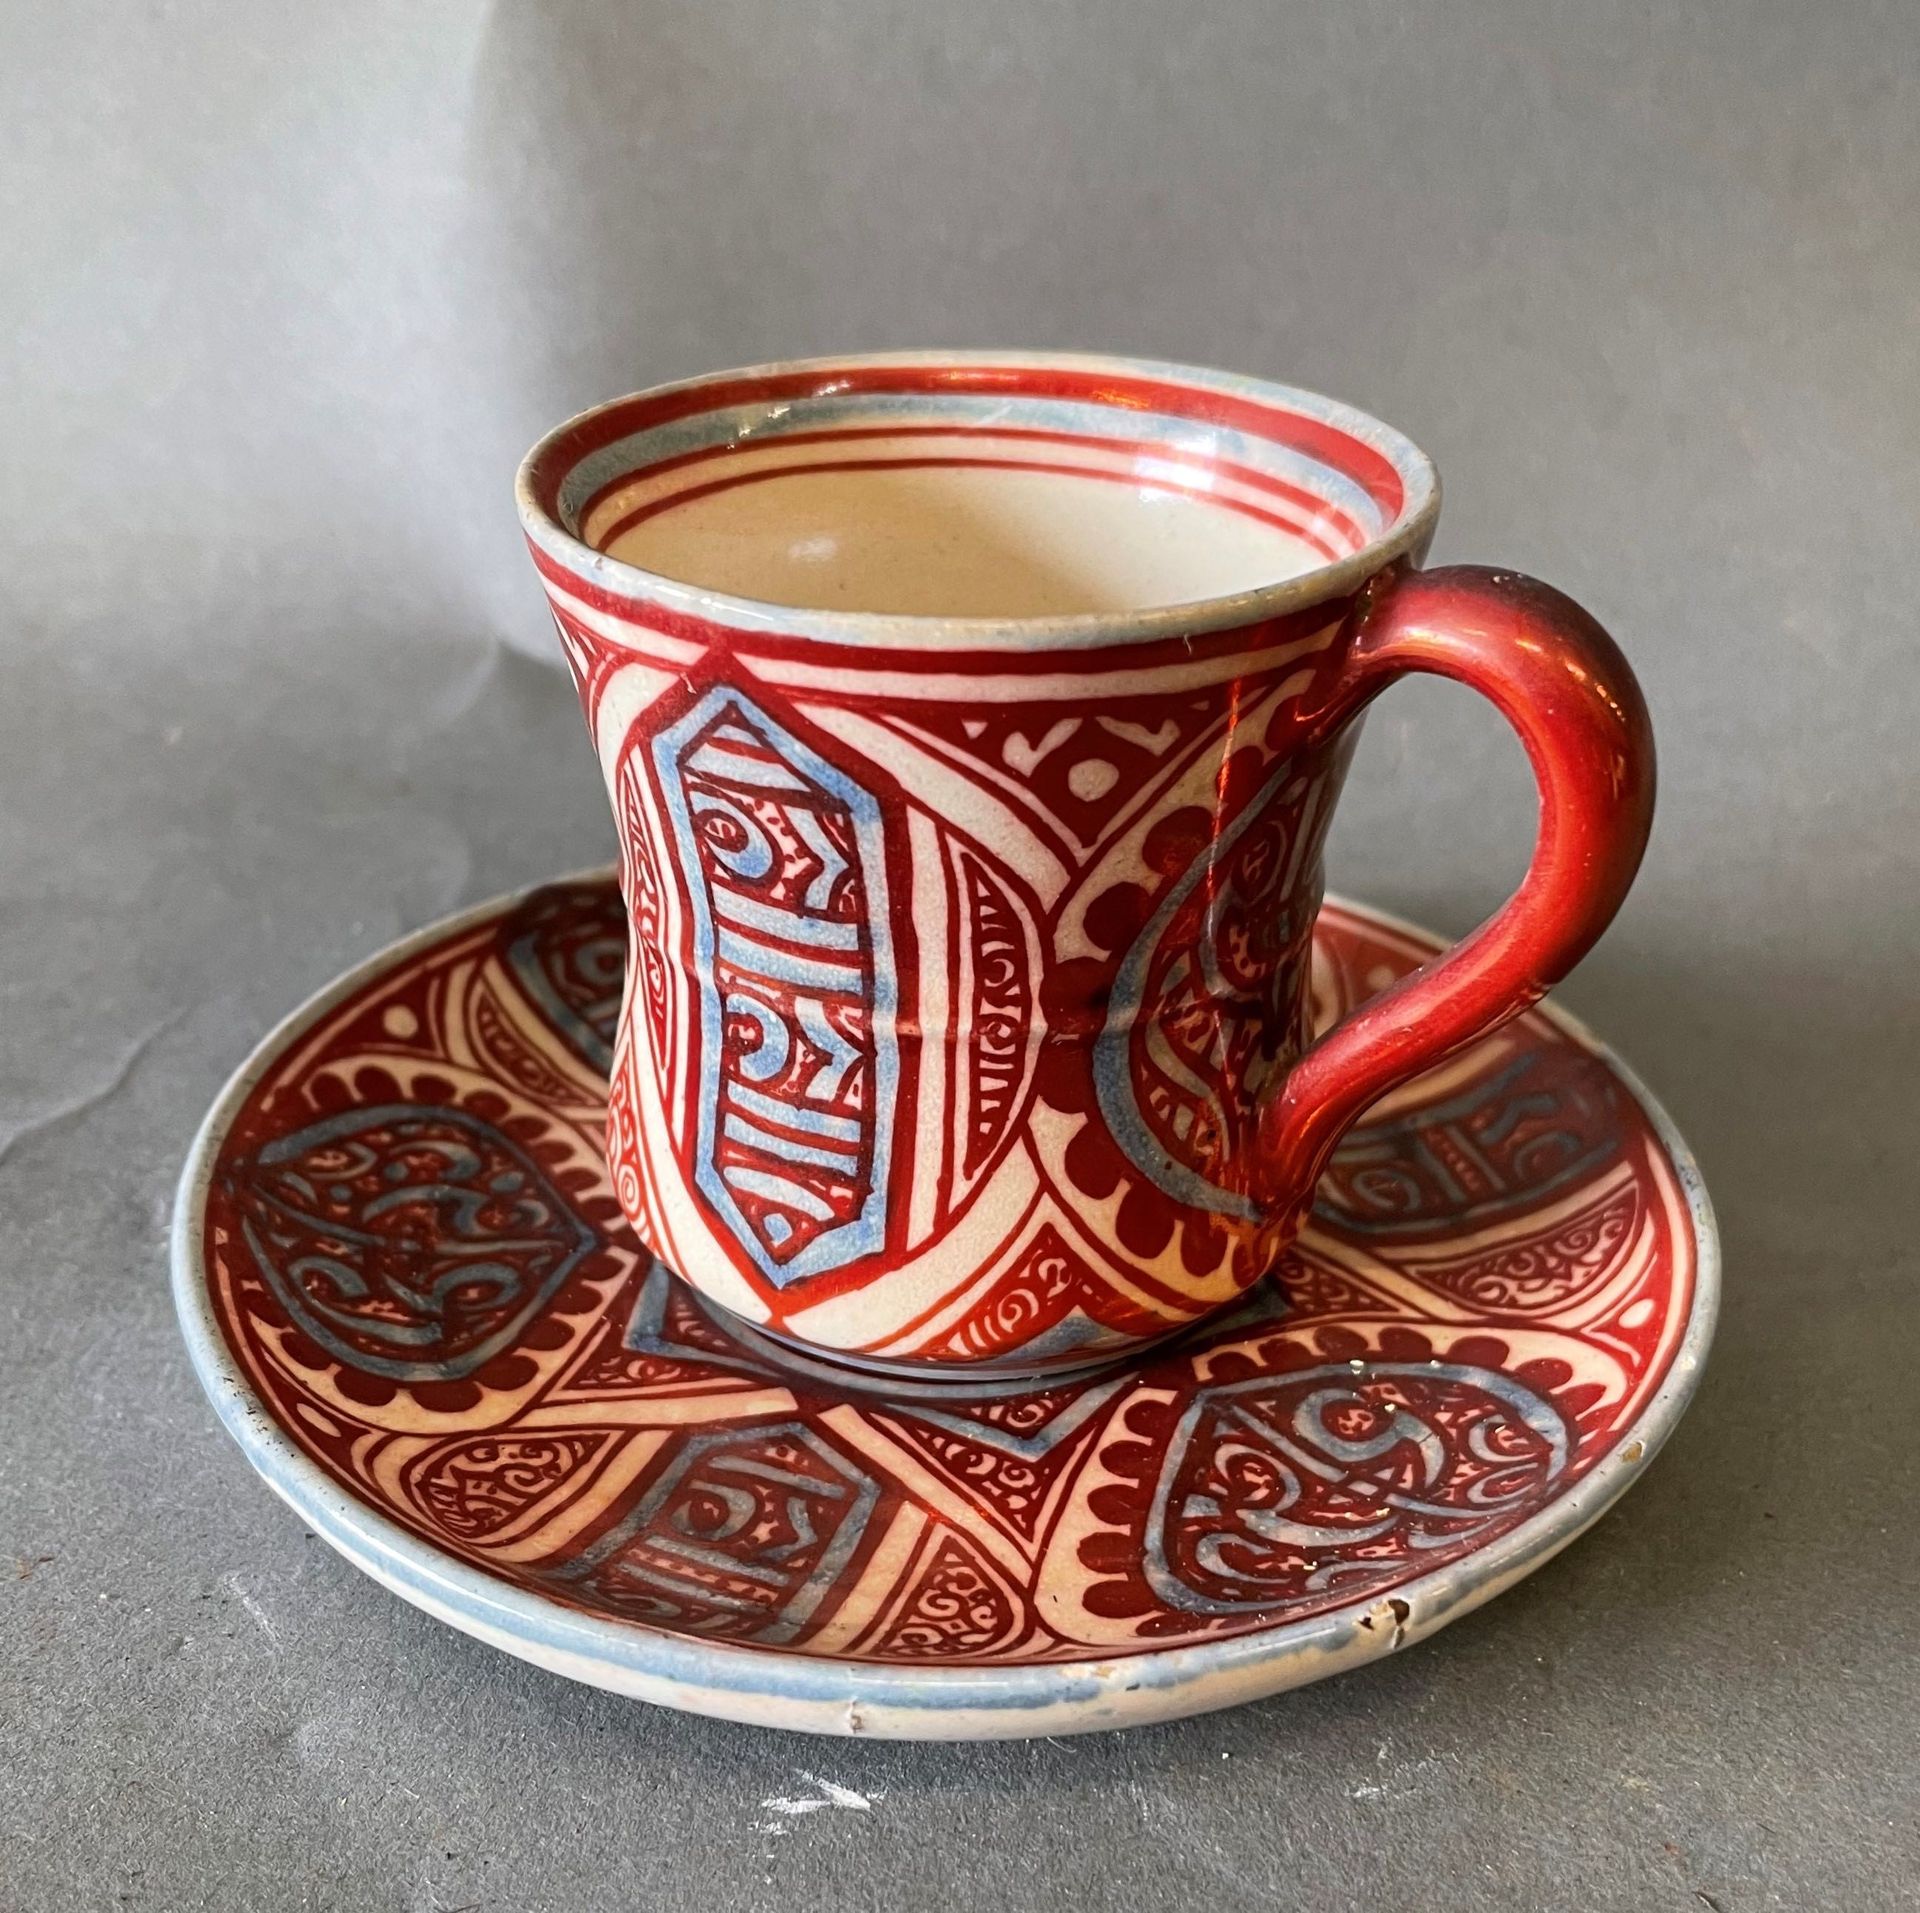 Null 伊朗。咖啡杯和茶托，硅质陶瓷，红棕色和蓝色金属光泽装饰。